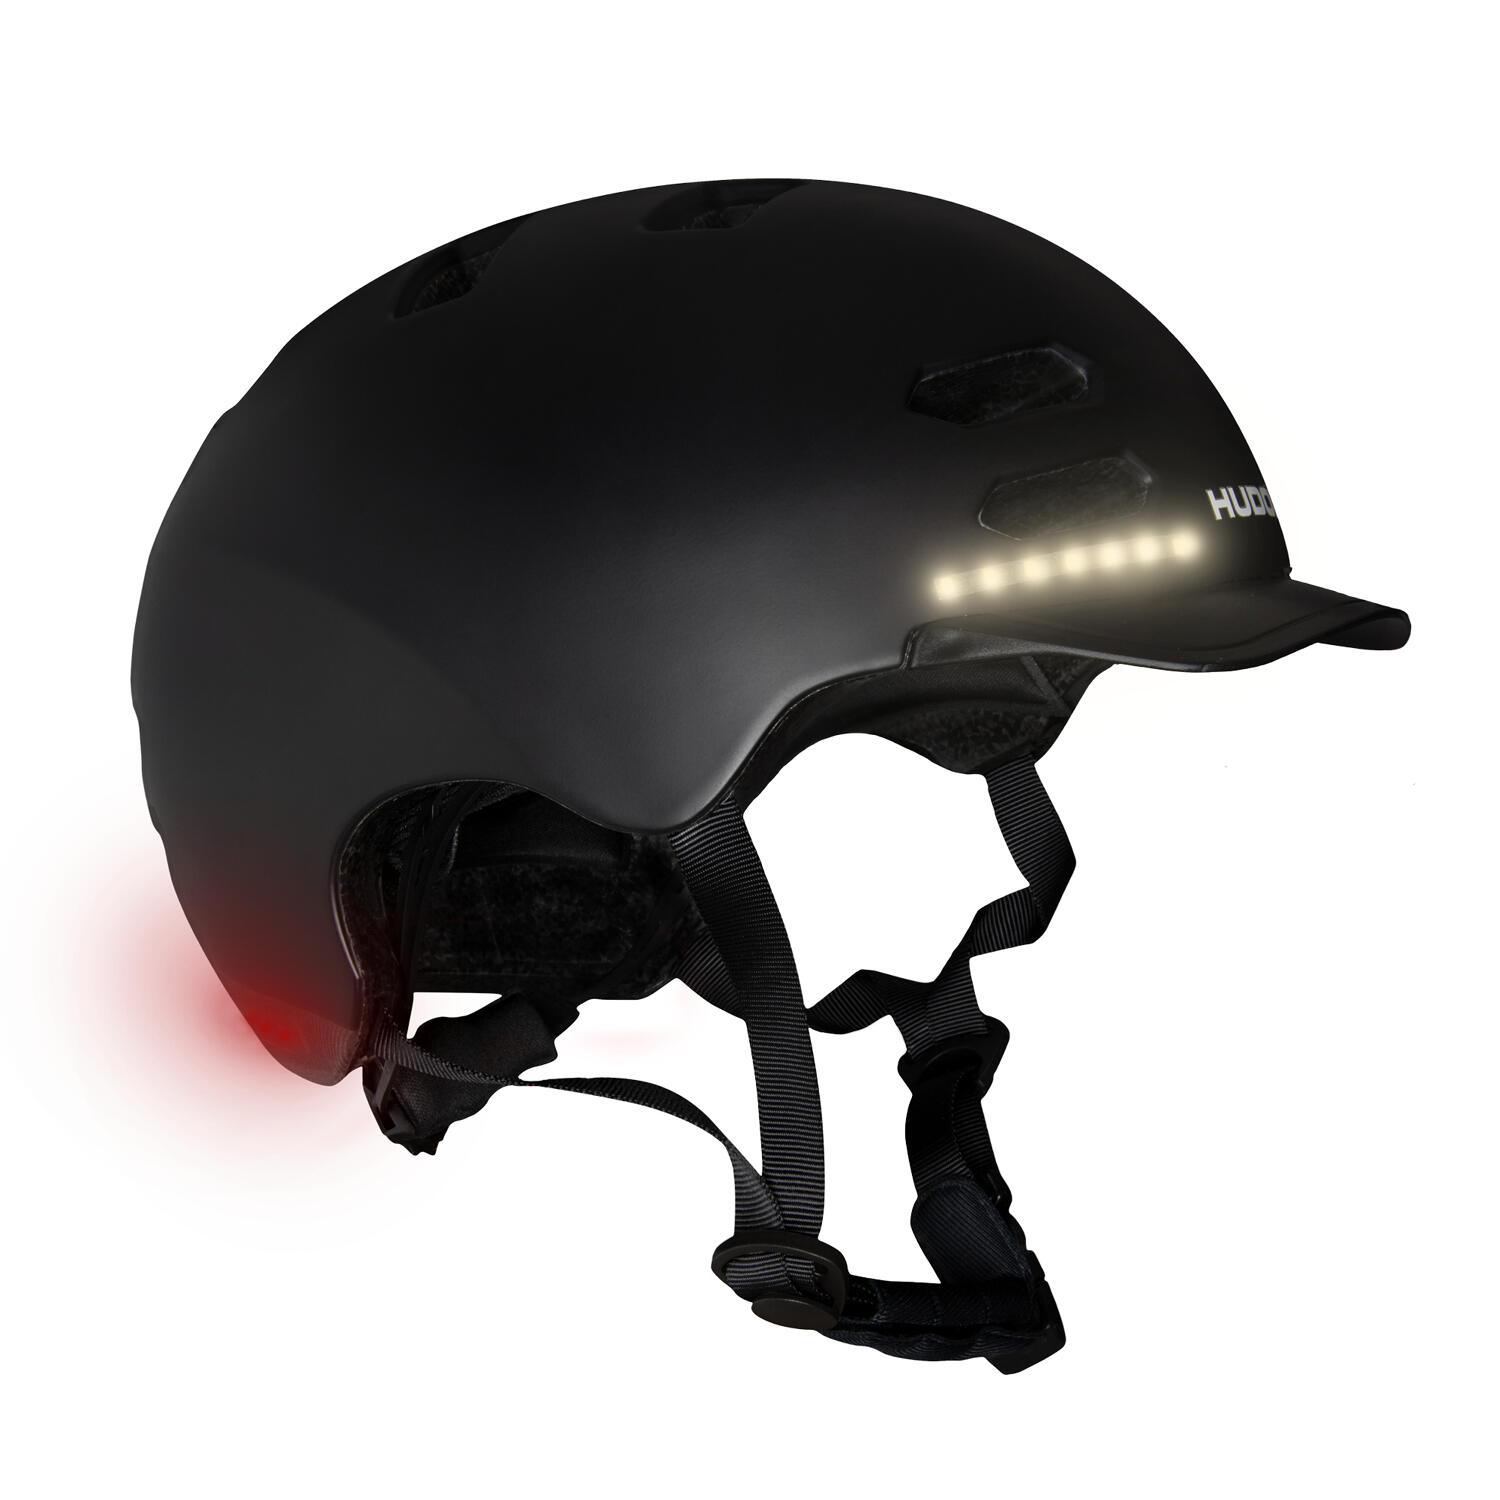 HUDORA Fahrrad-/Skate-Helm mit integrierten LED-Lampen 